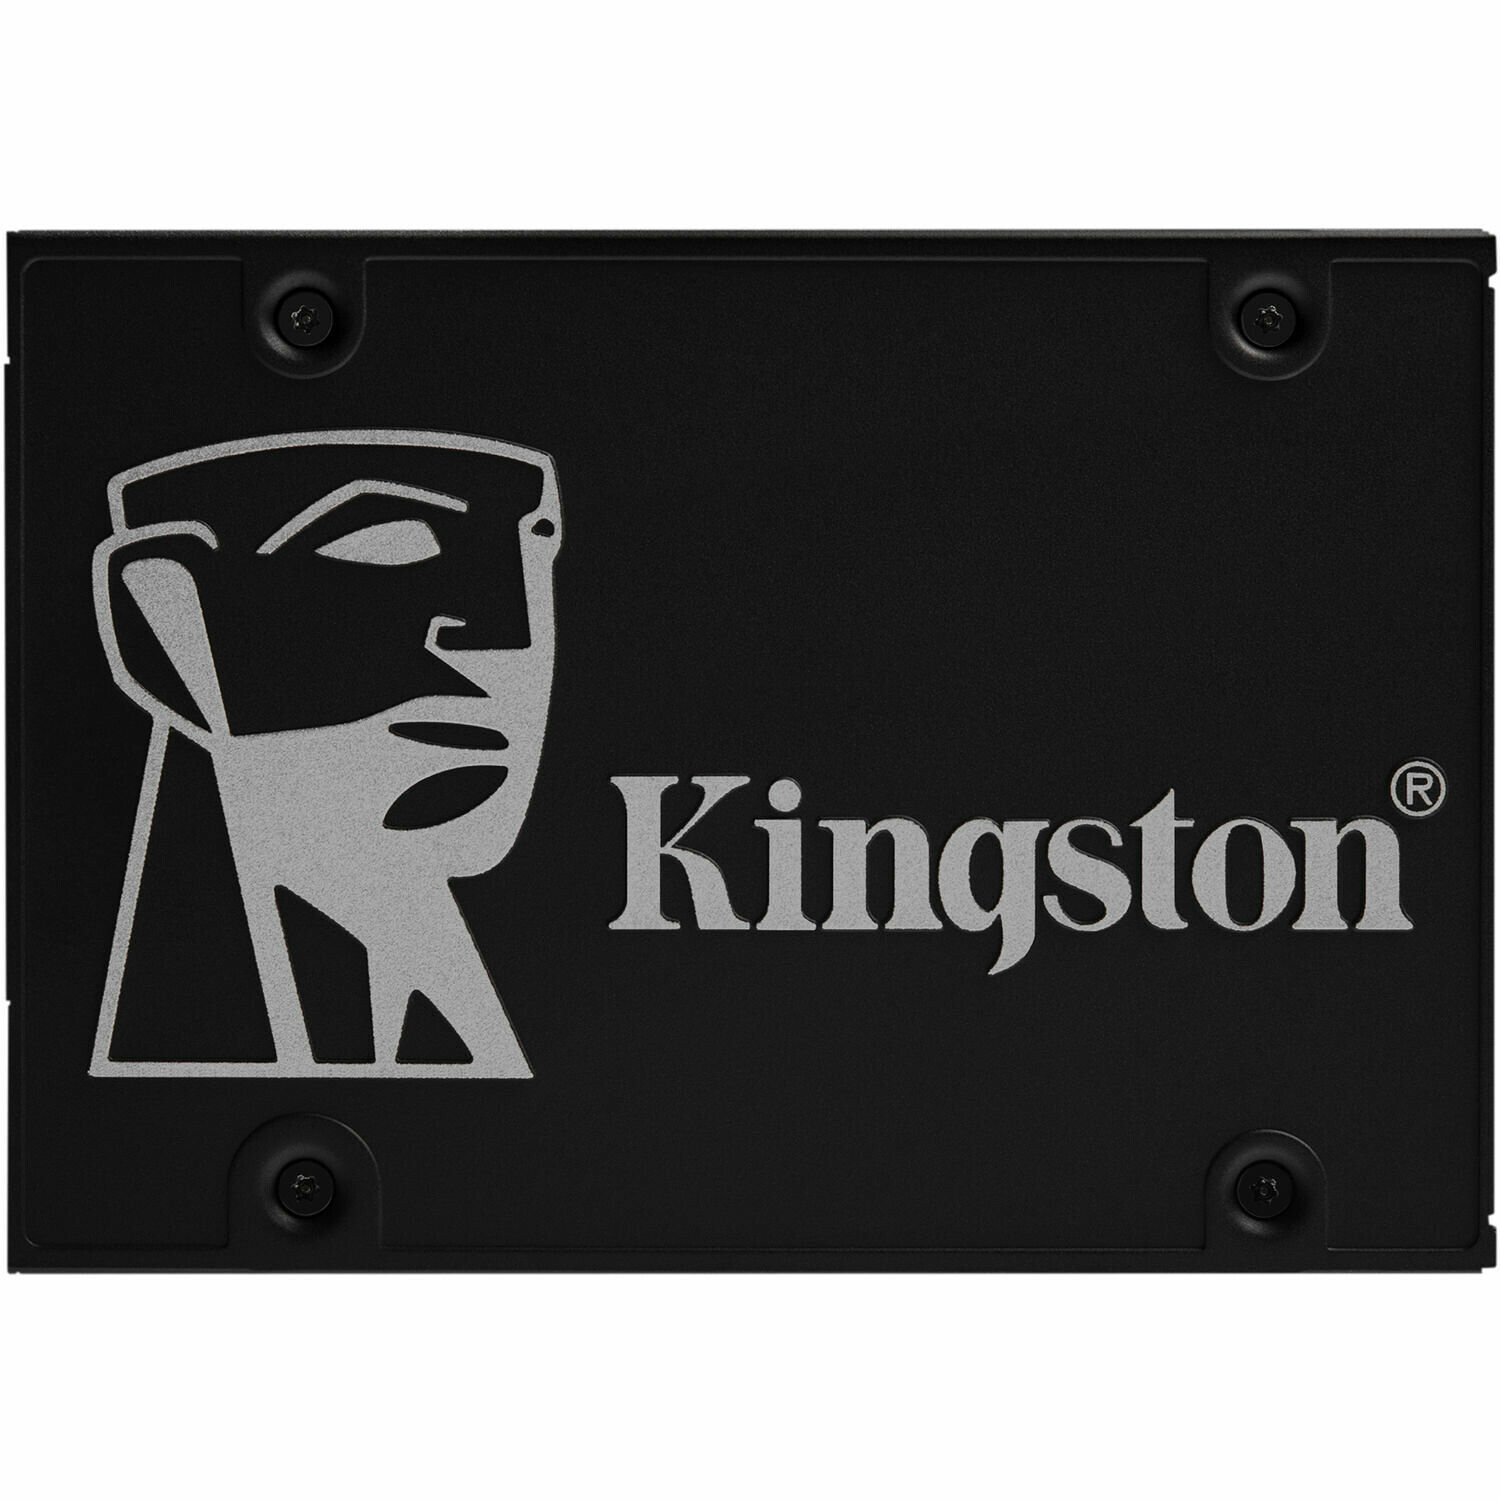 Kingston KC600 256 Go (image:2)